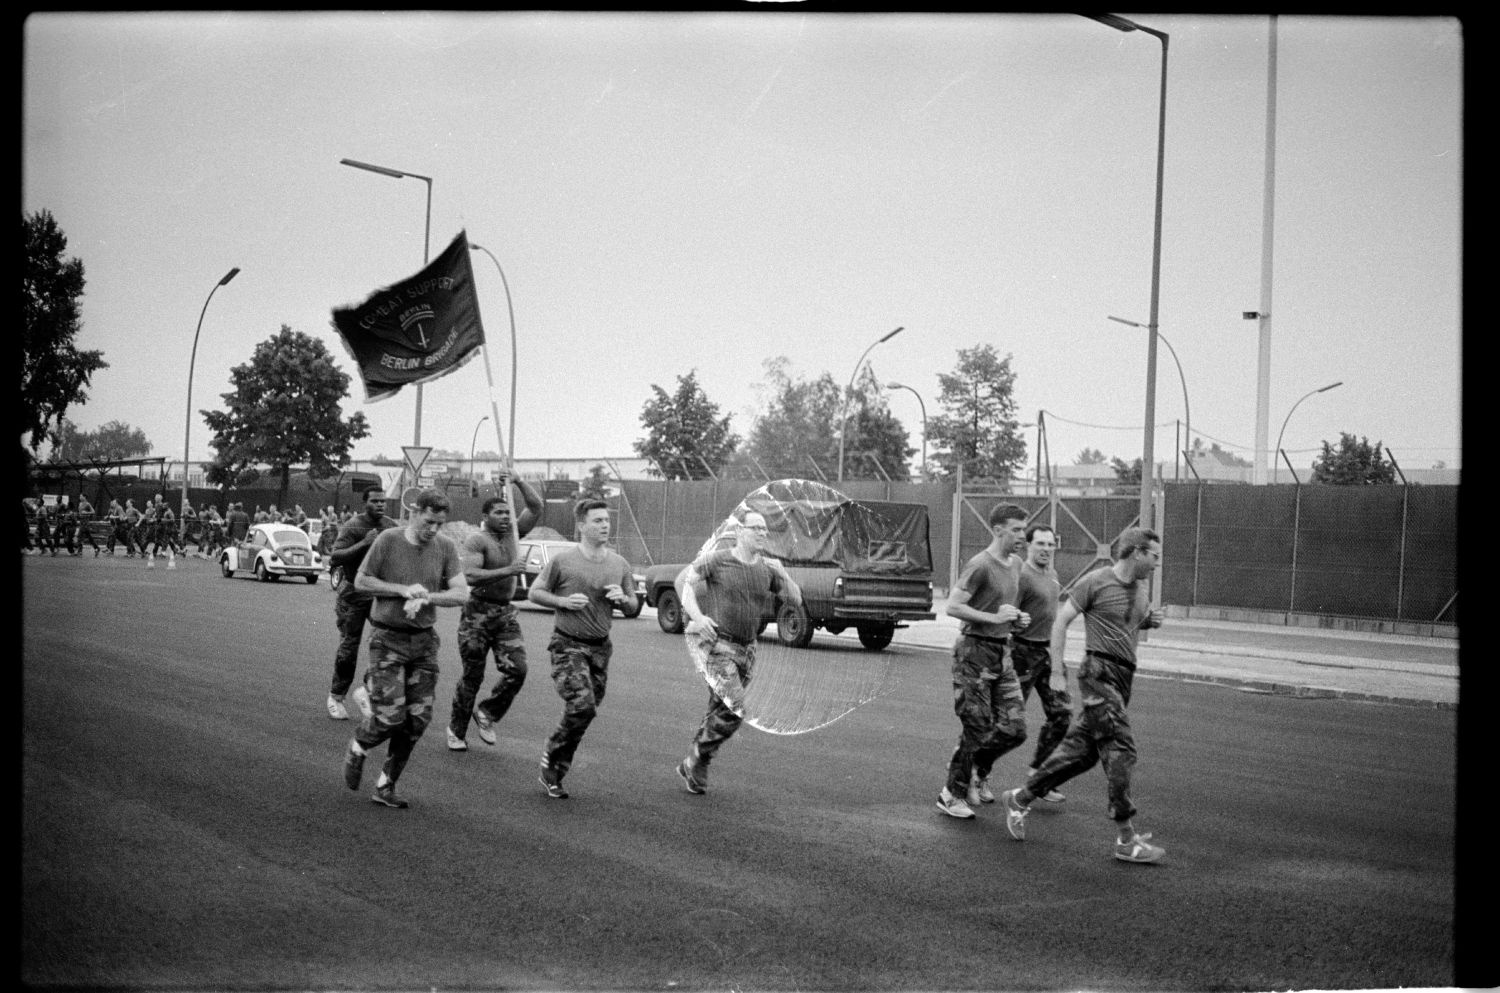 S/w-Fotografie: Brigade Run der U.S. Army Berlin Brigade in den McNair Barracks in Berlin-Lichterfelde